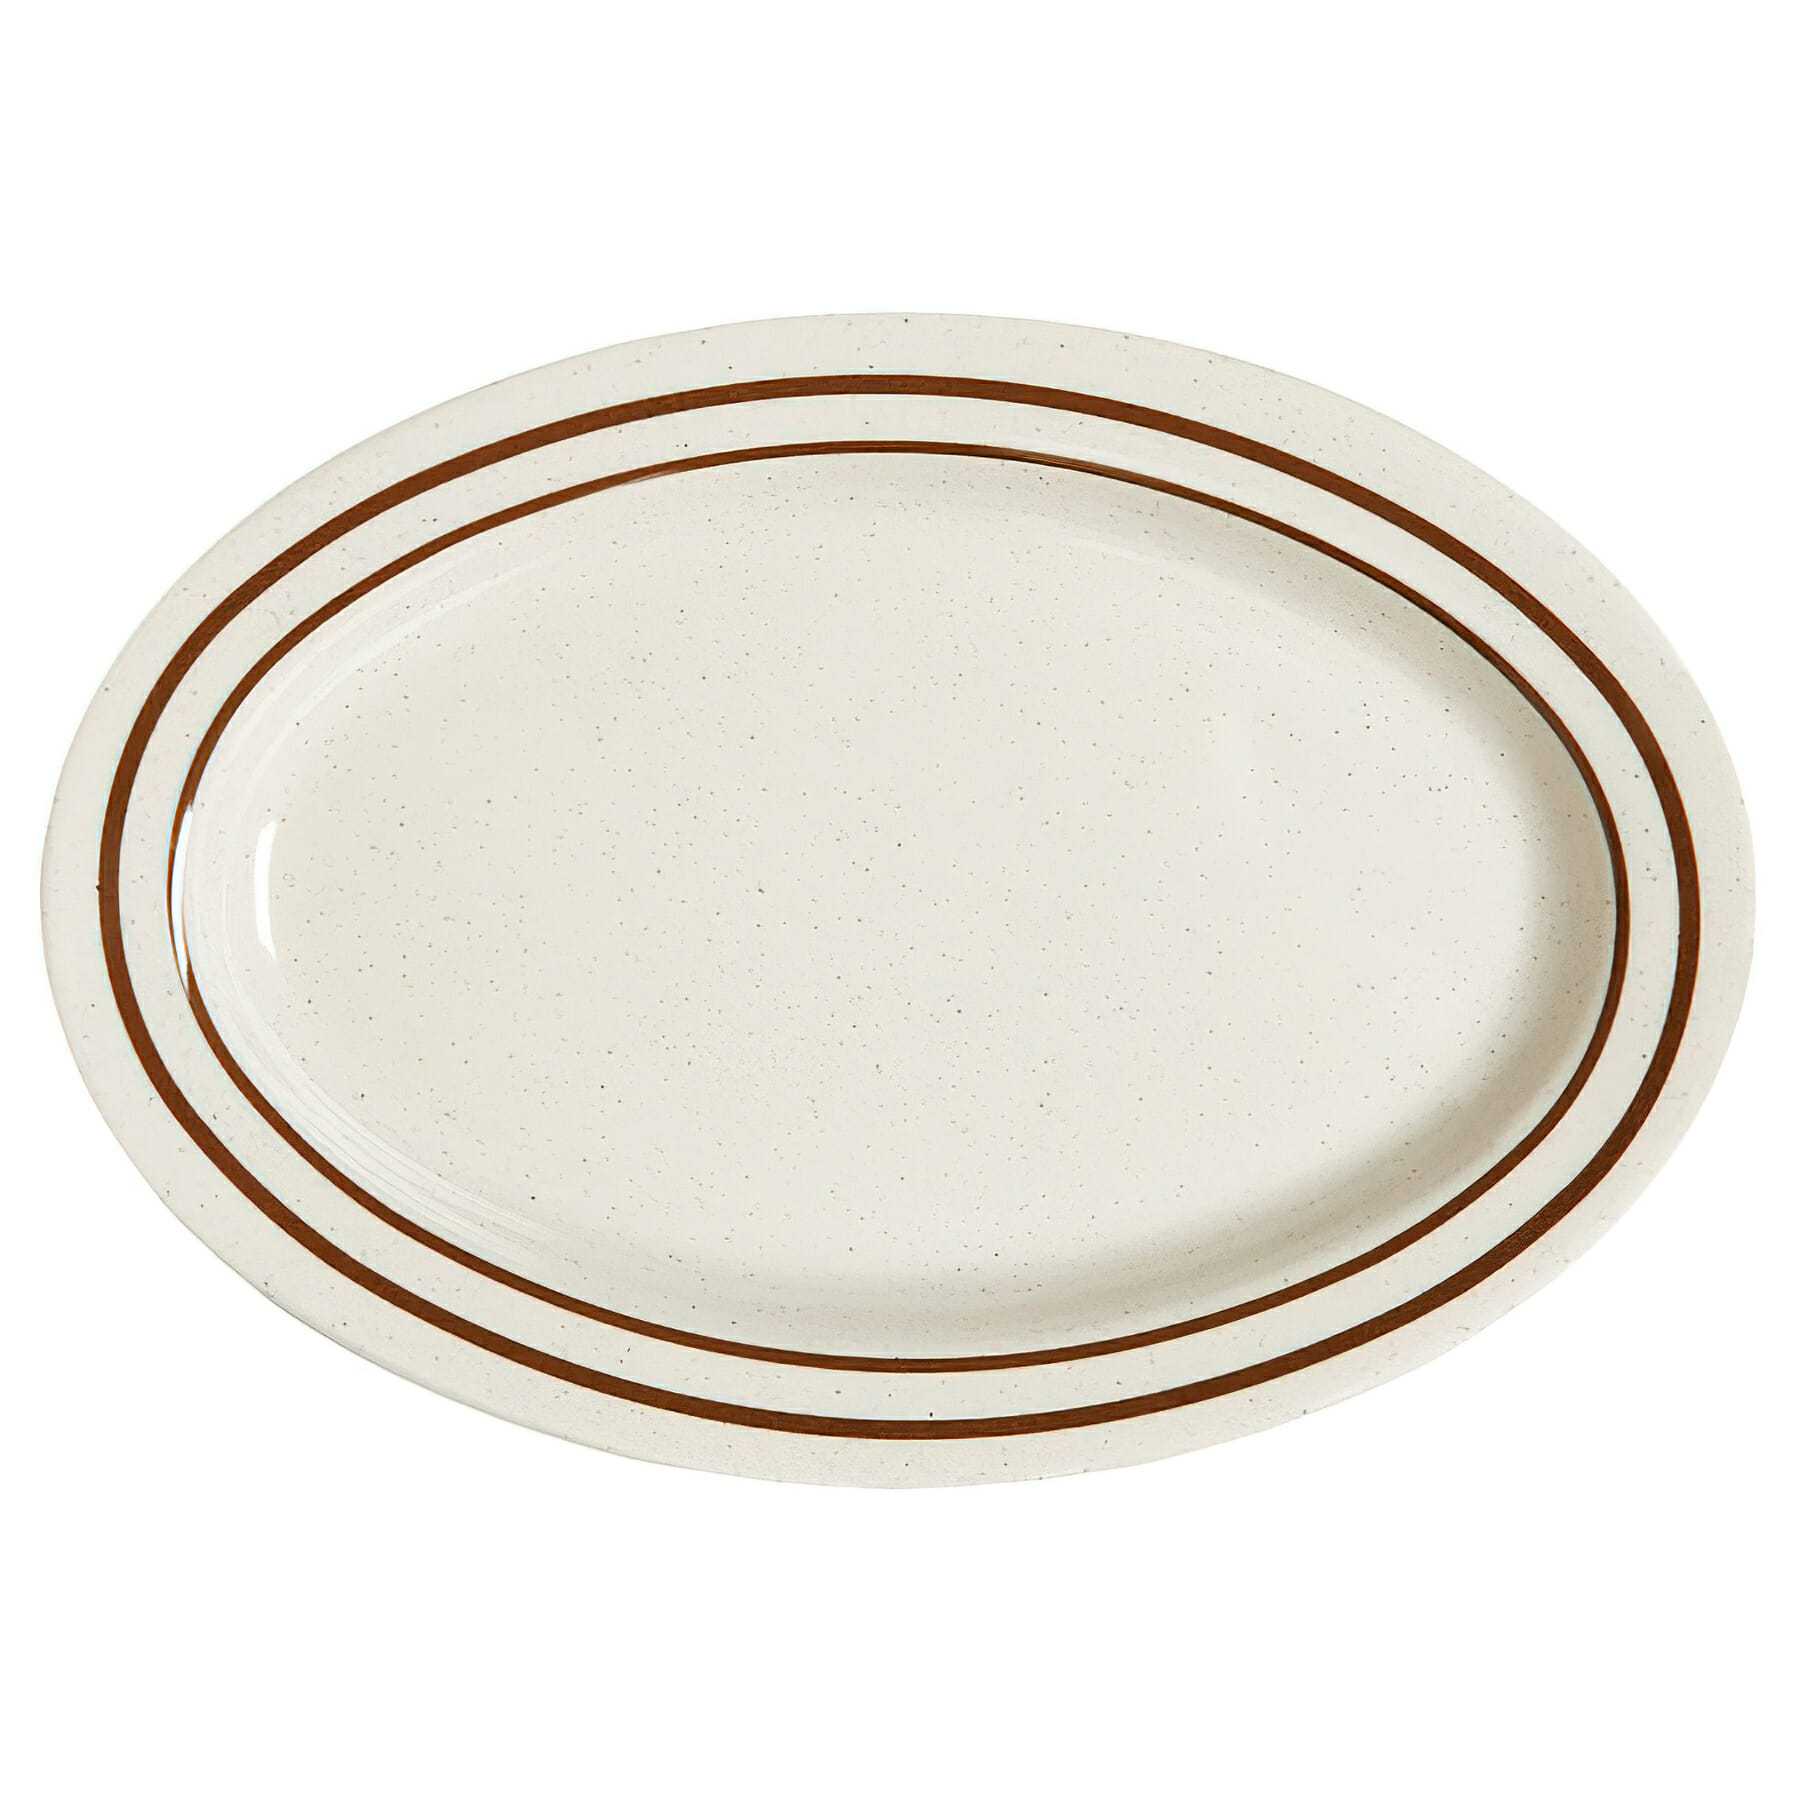 11.5" x 8" Oval Platter